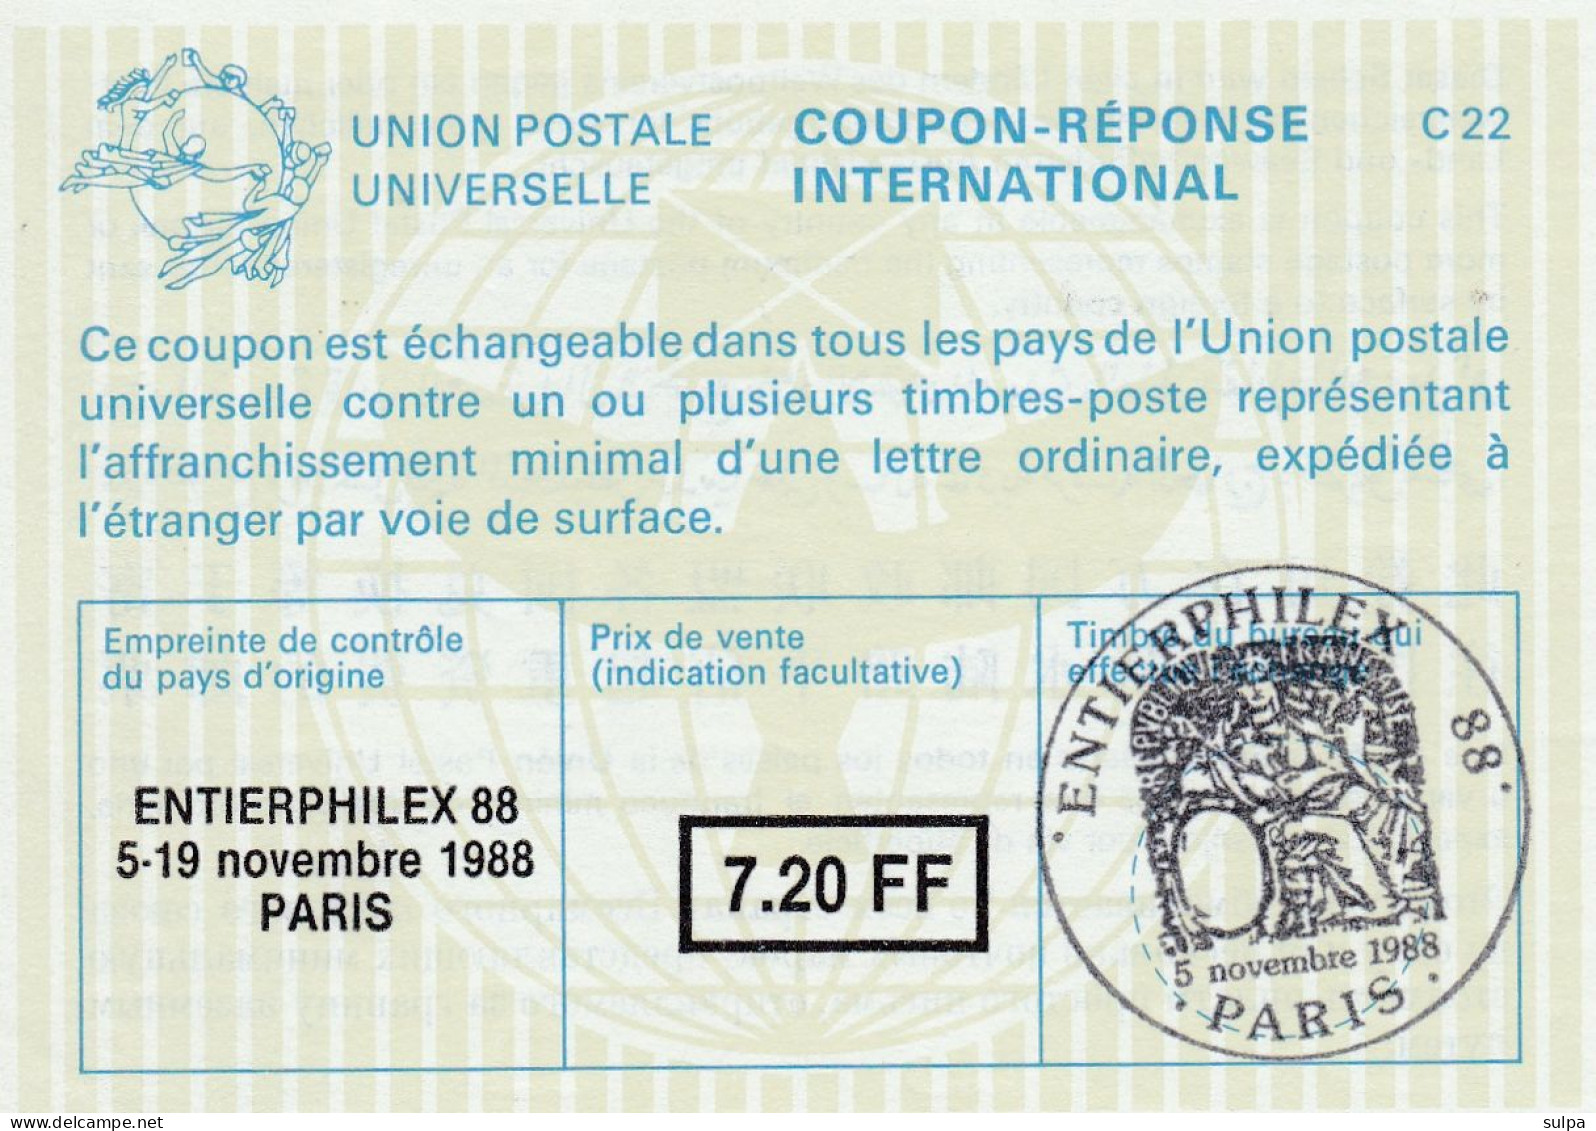 Coupon-réponse PARIS 1988 - Cupón-respuesta